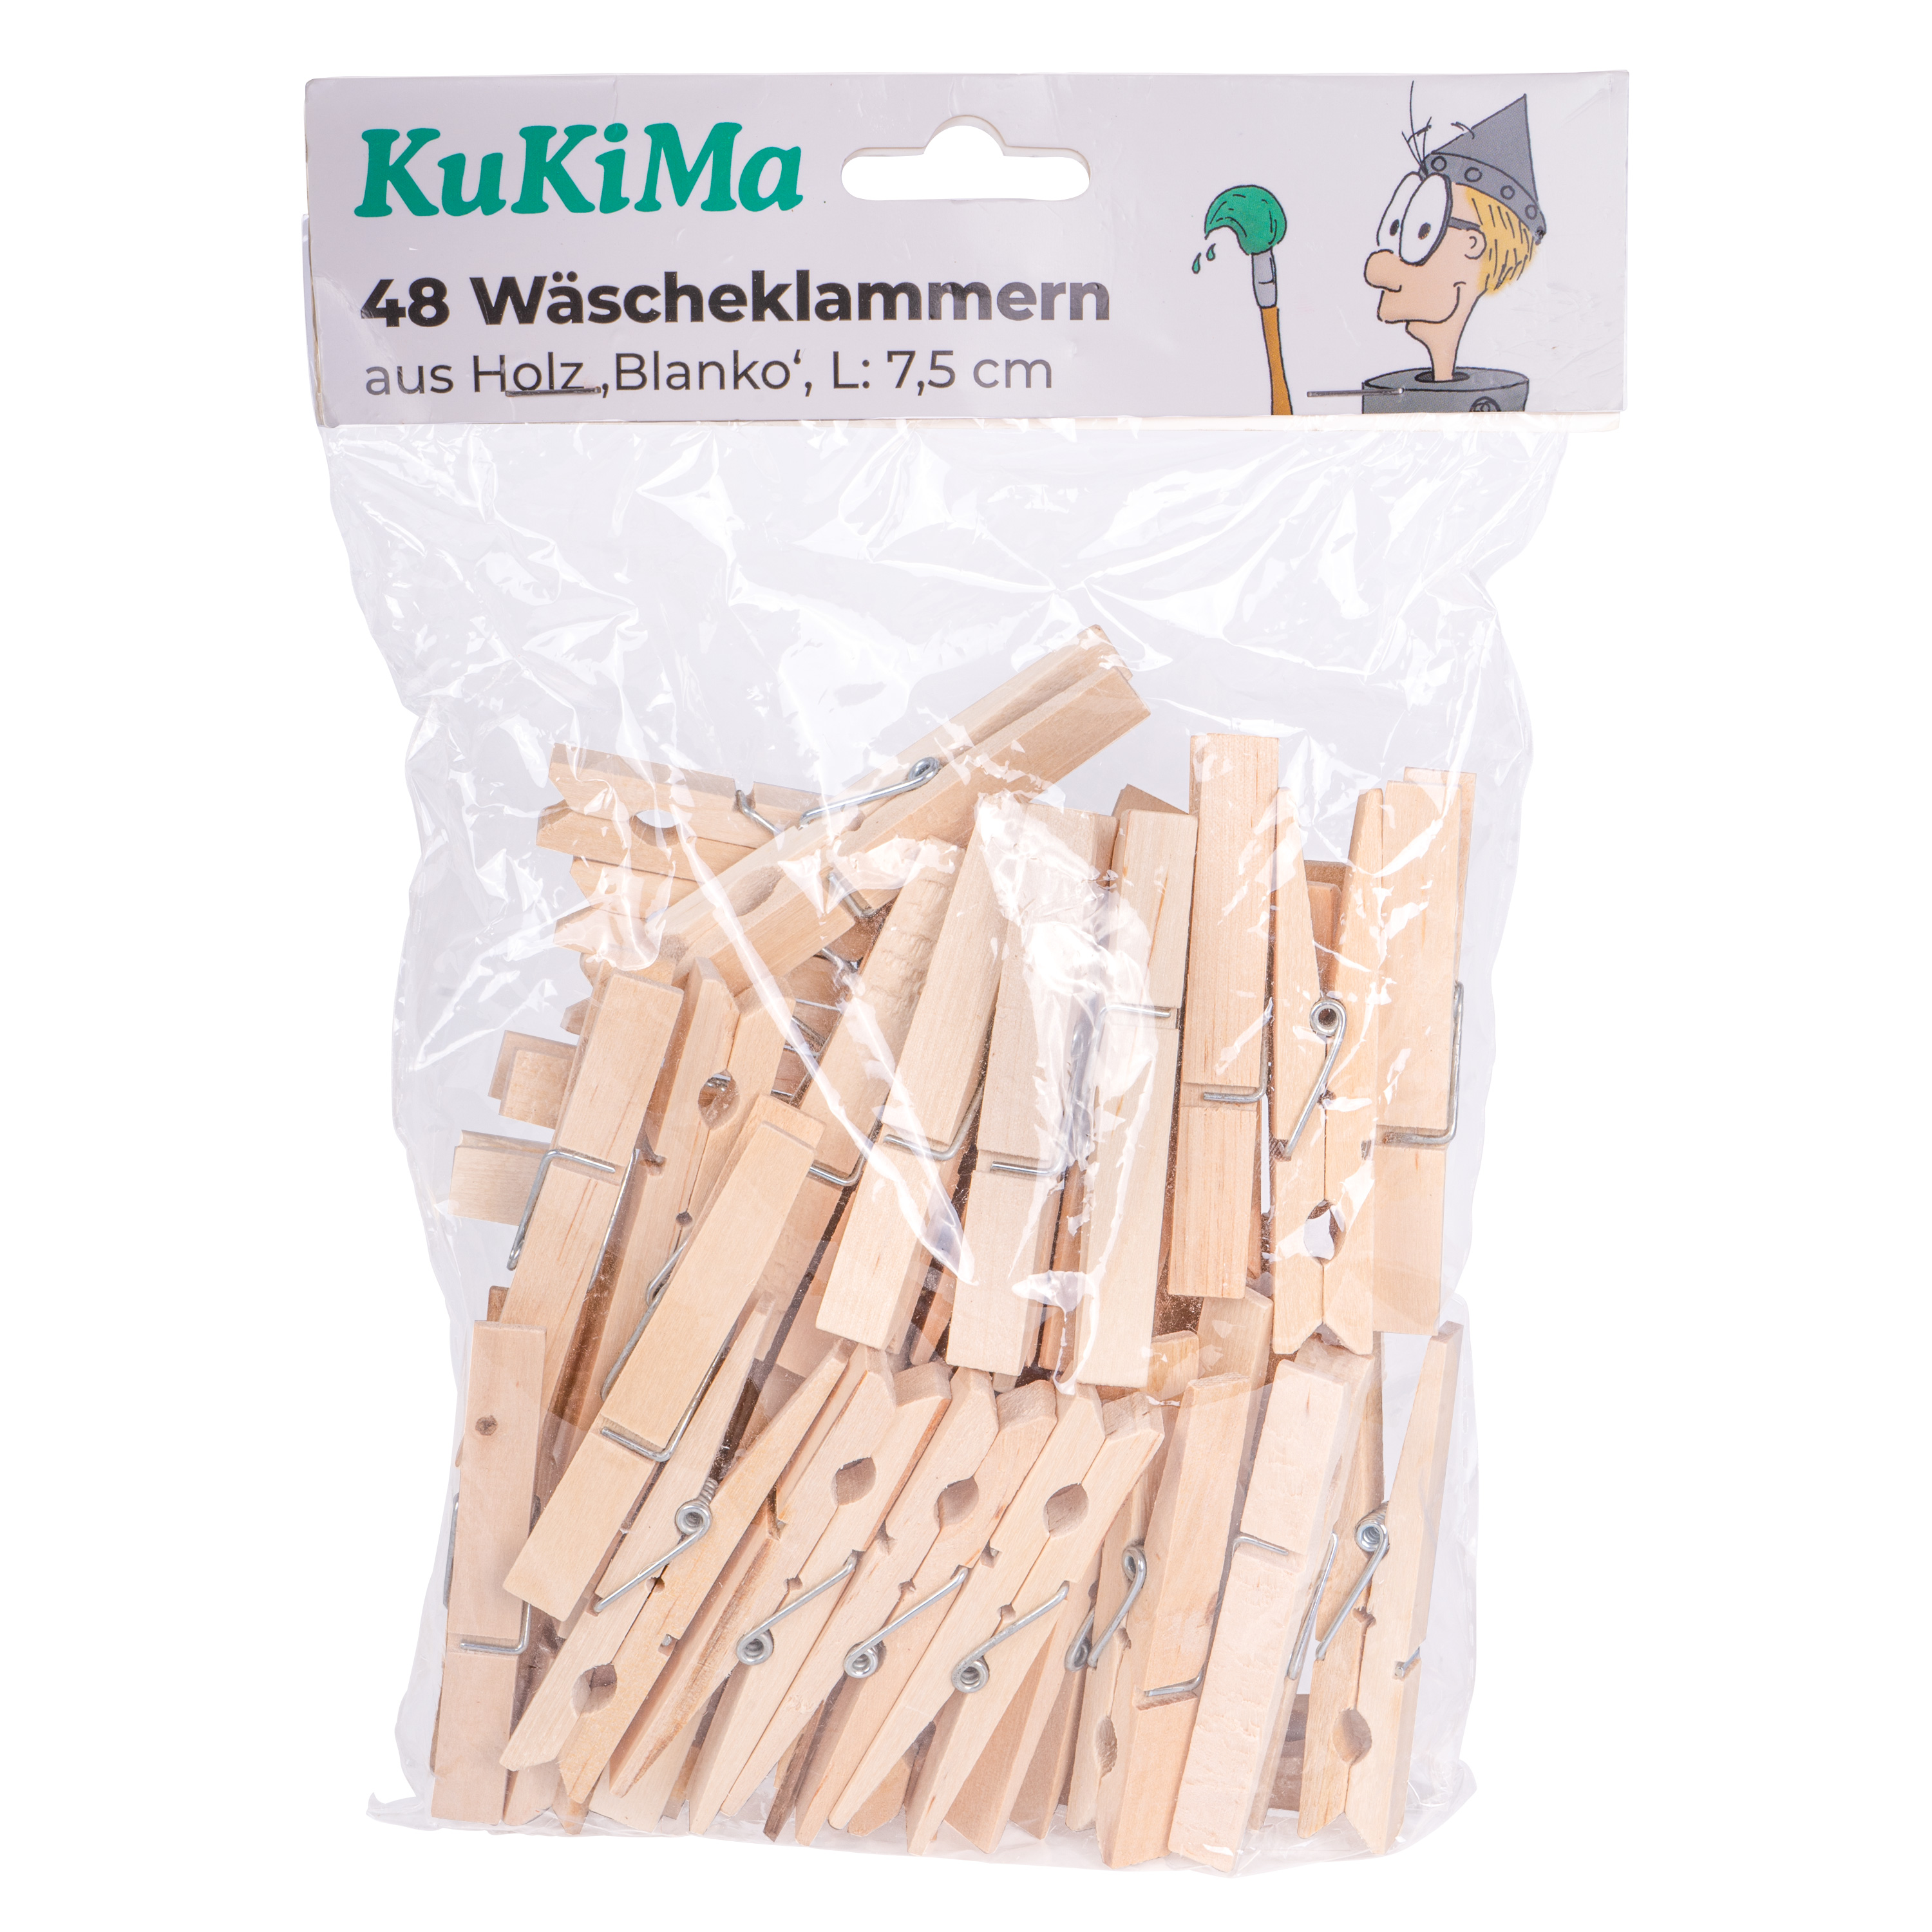 KuKiMa 48 Wäscheklammern aus Holz 'Blanko', L: 7,5 cm